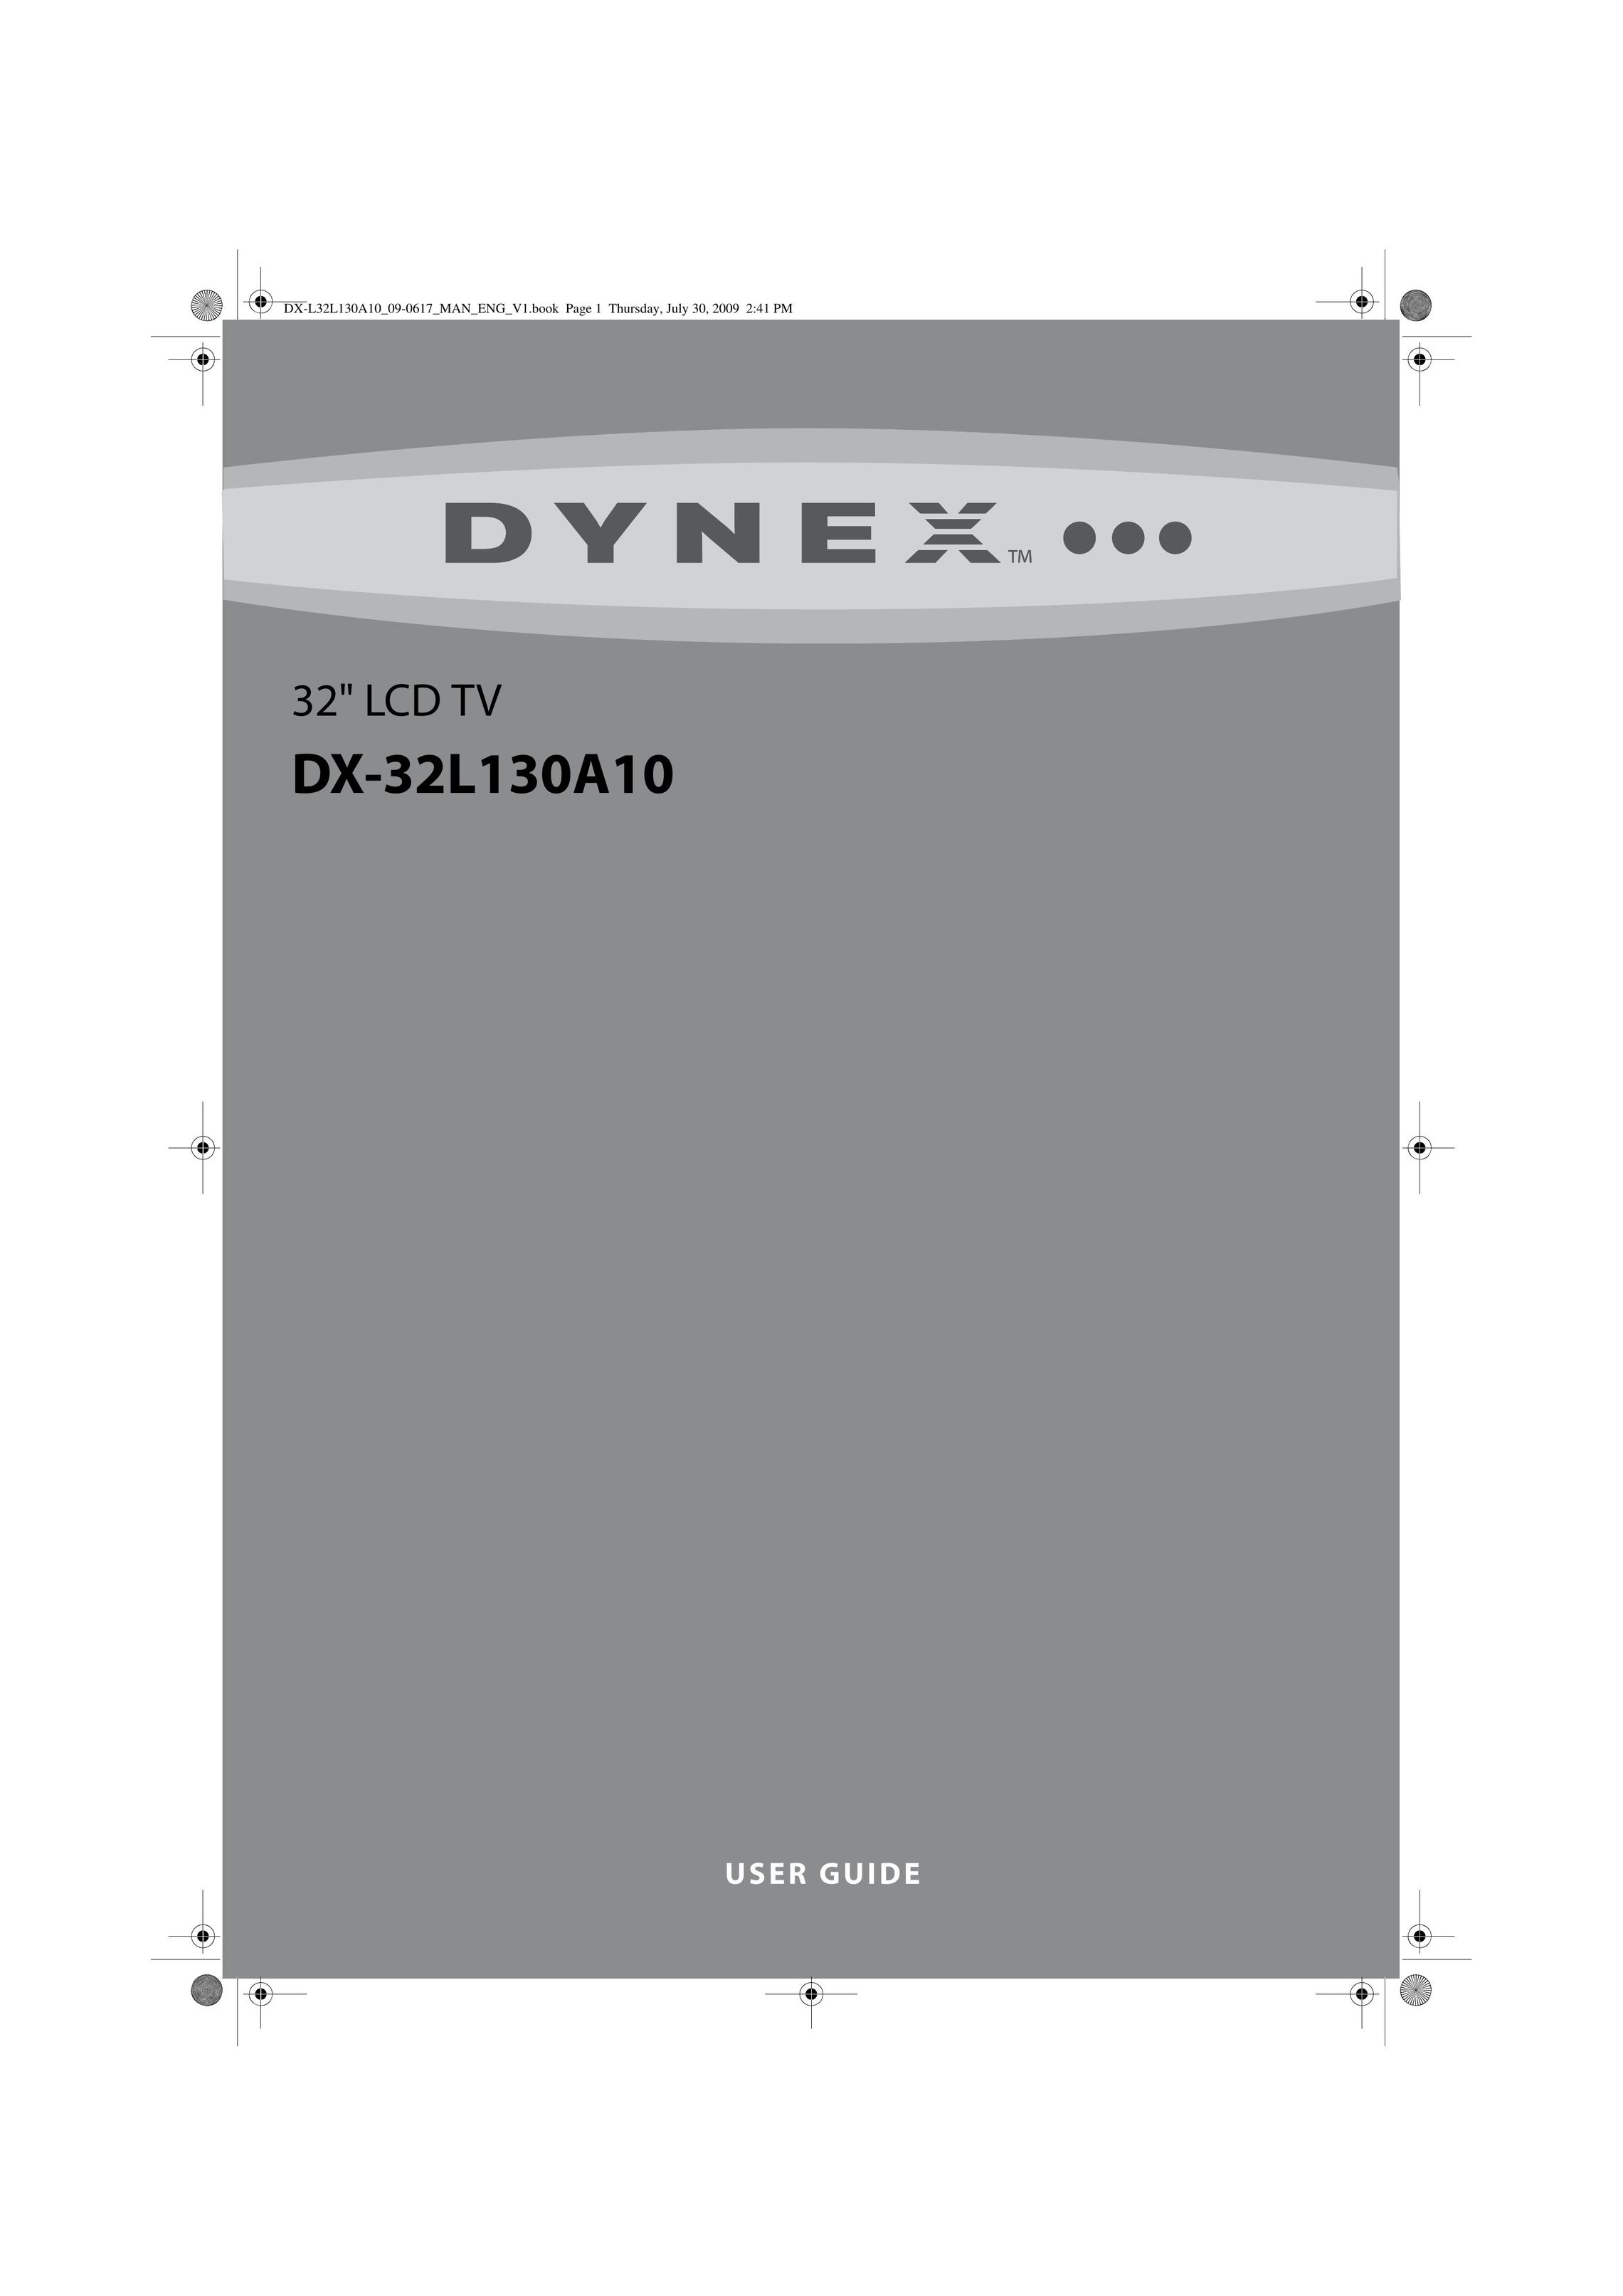 Dynex DX-32L130A10 Flat Panel Television User Manual